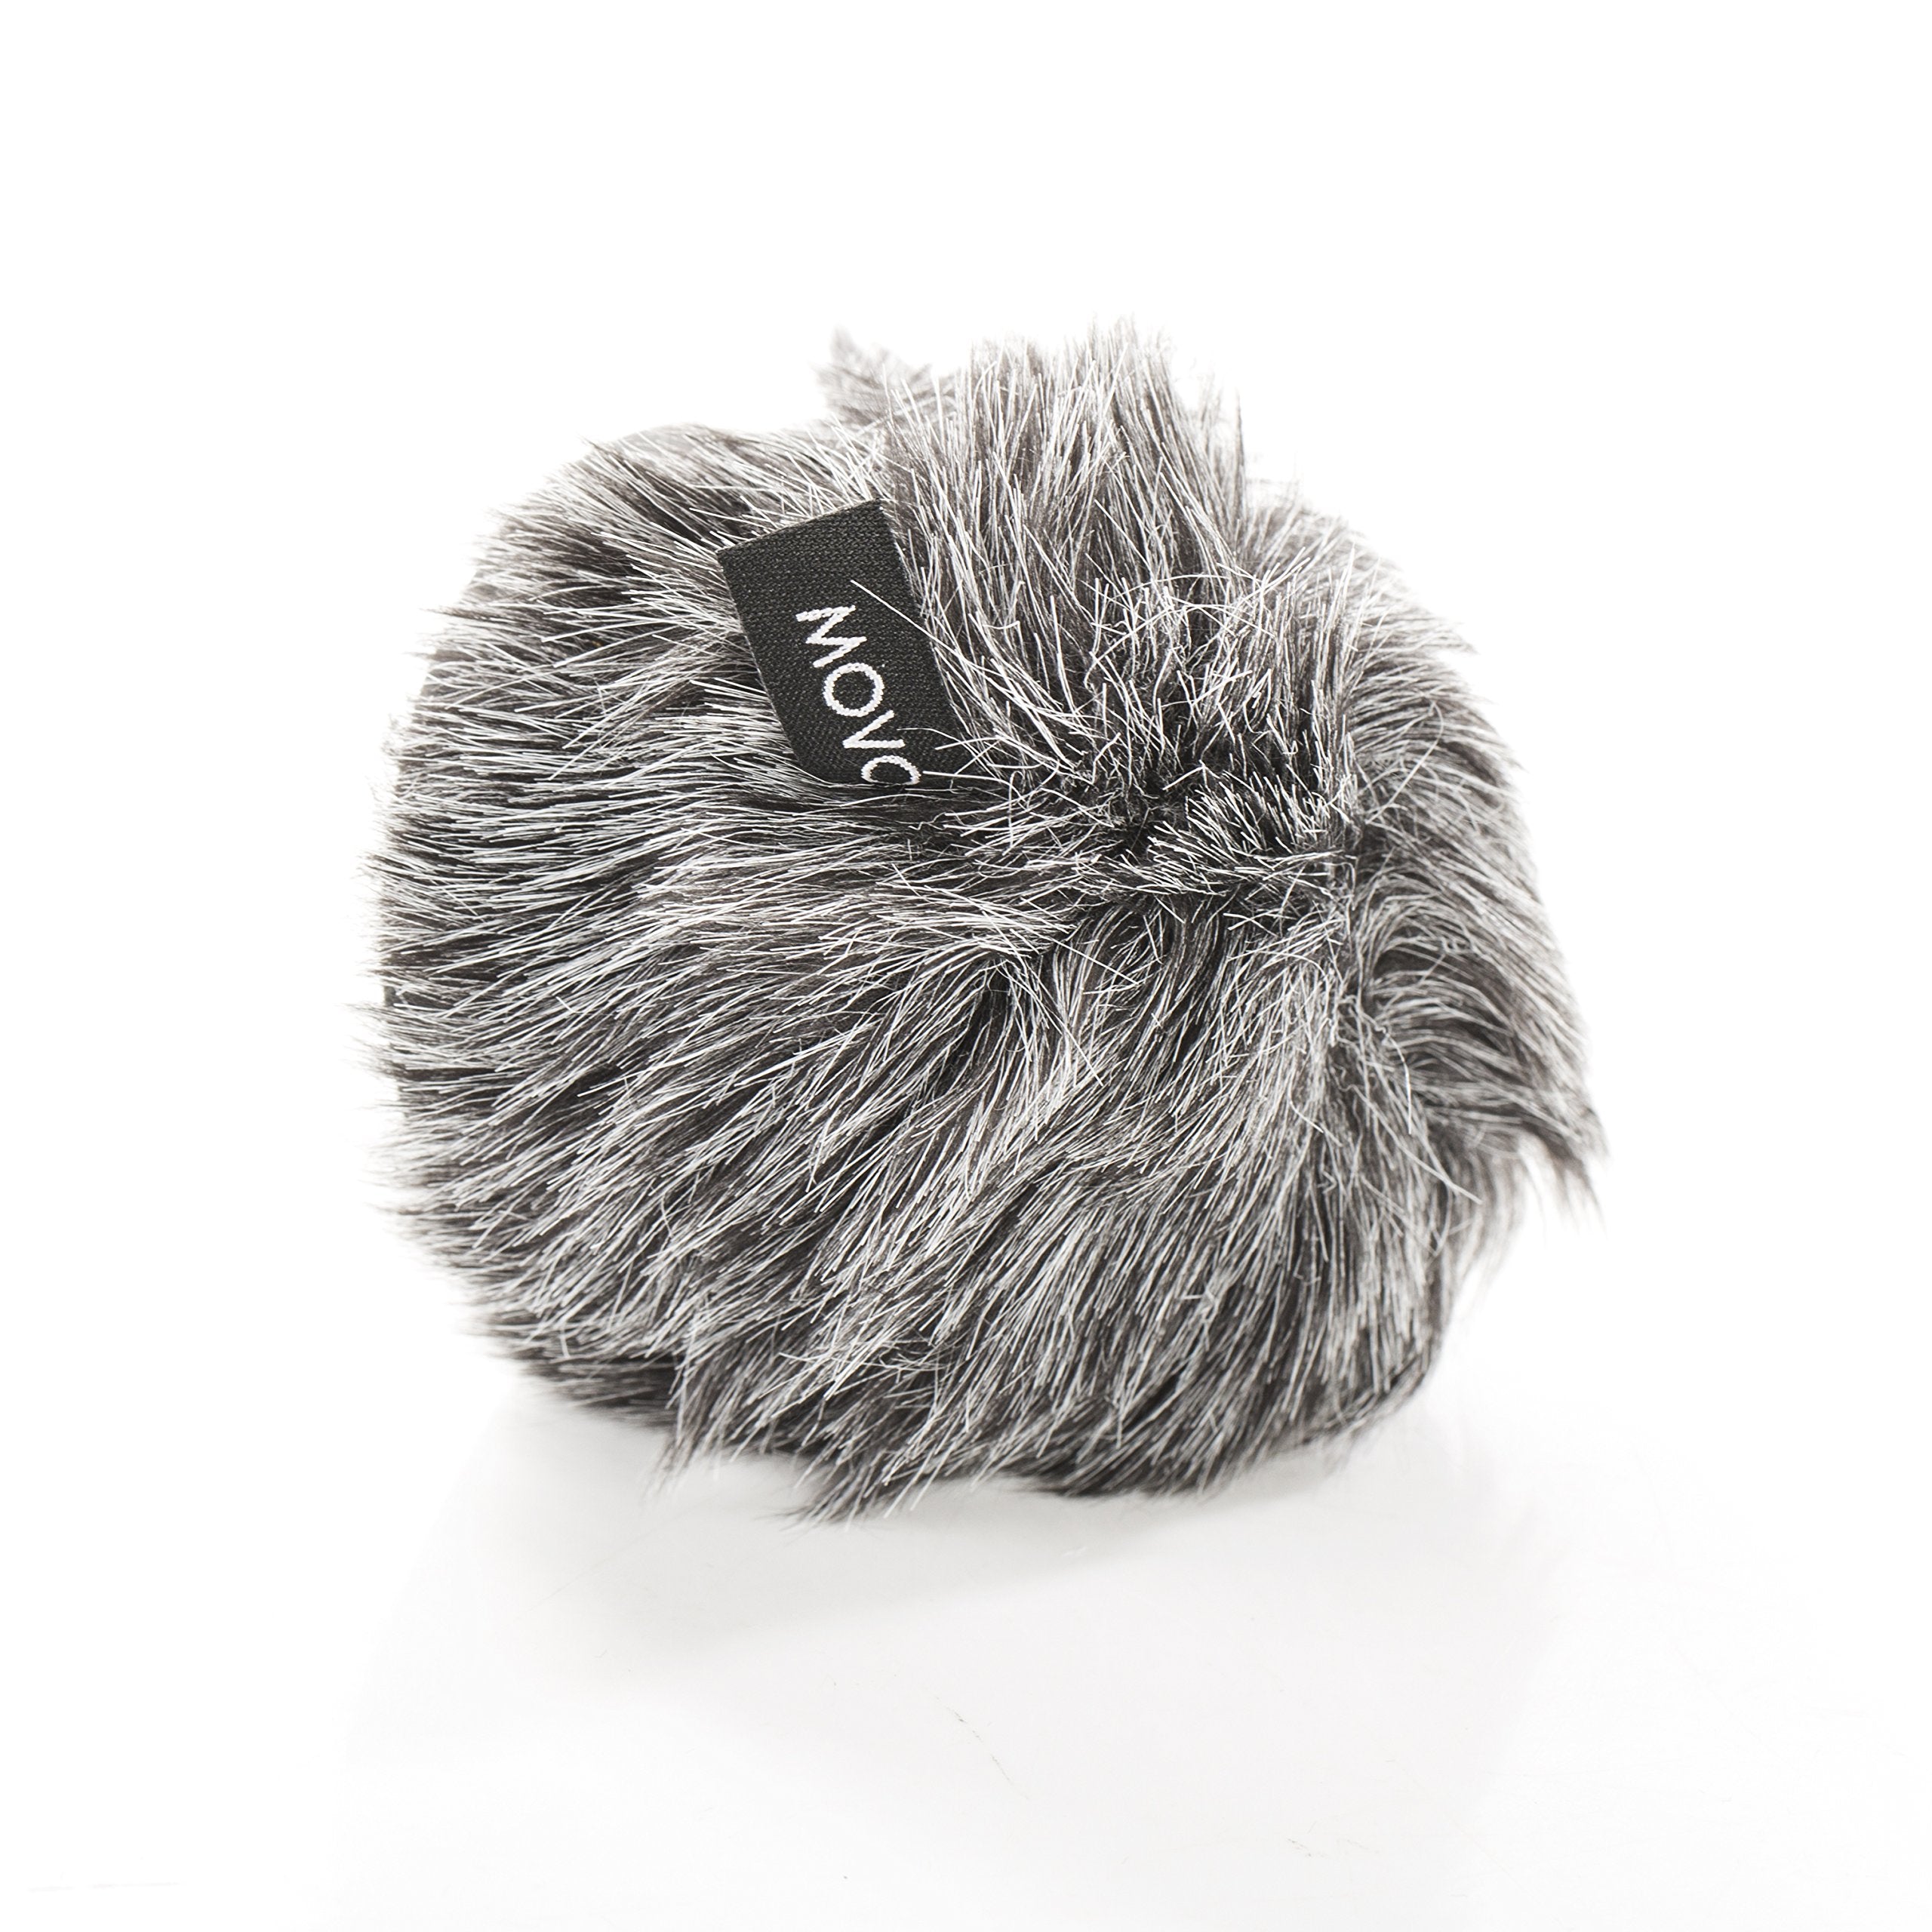 Movo WS-G Furry Rigid Windscreen for Microphones 18-23mm in Diameter - Dark Gray  - Like New